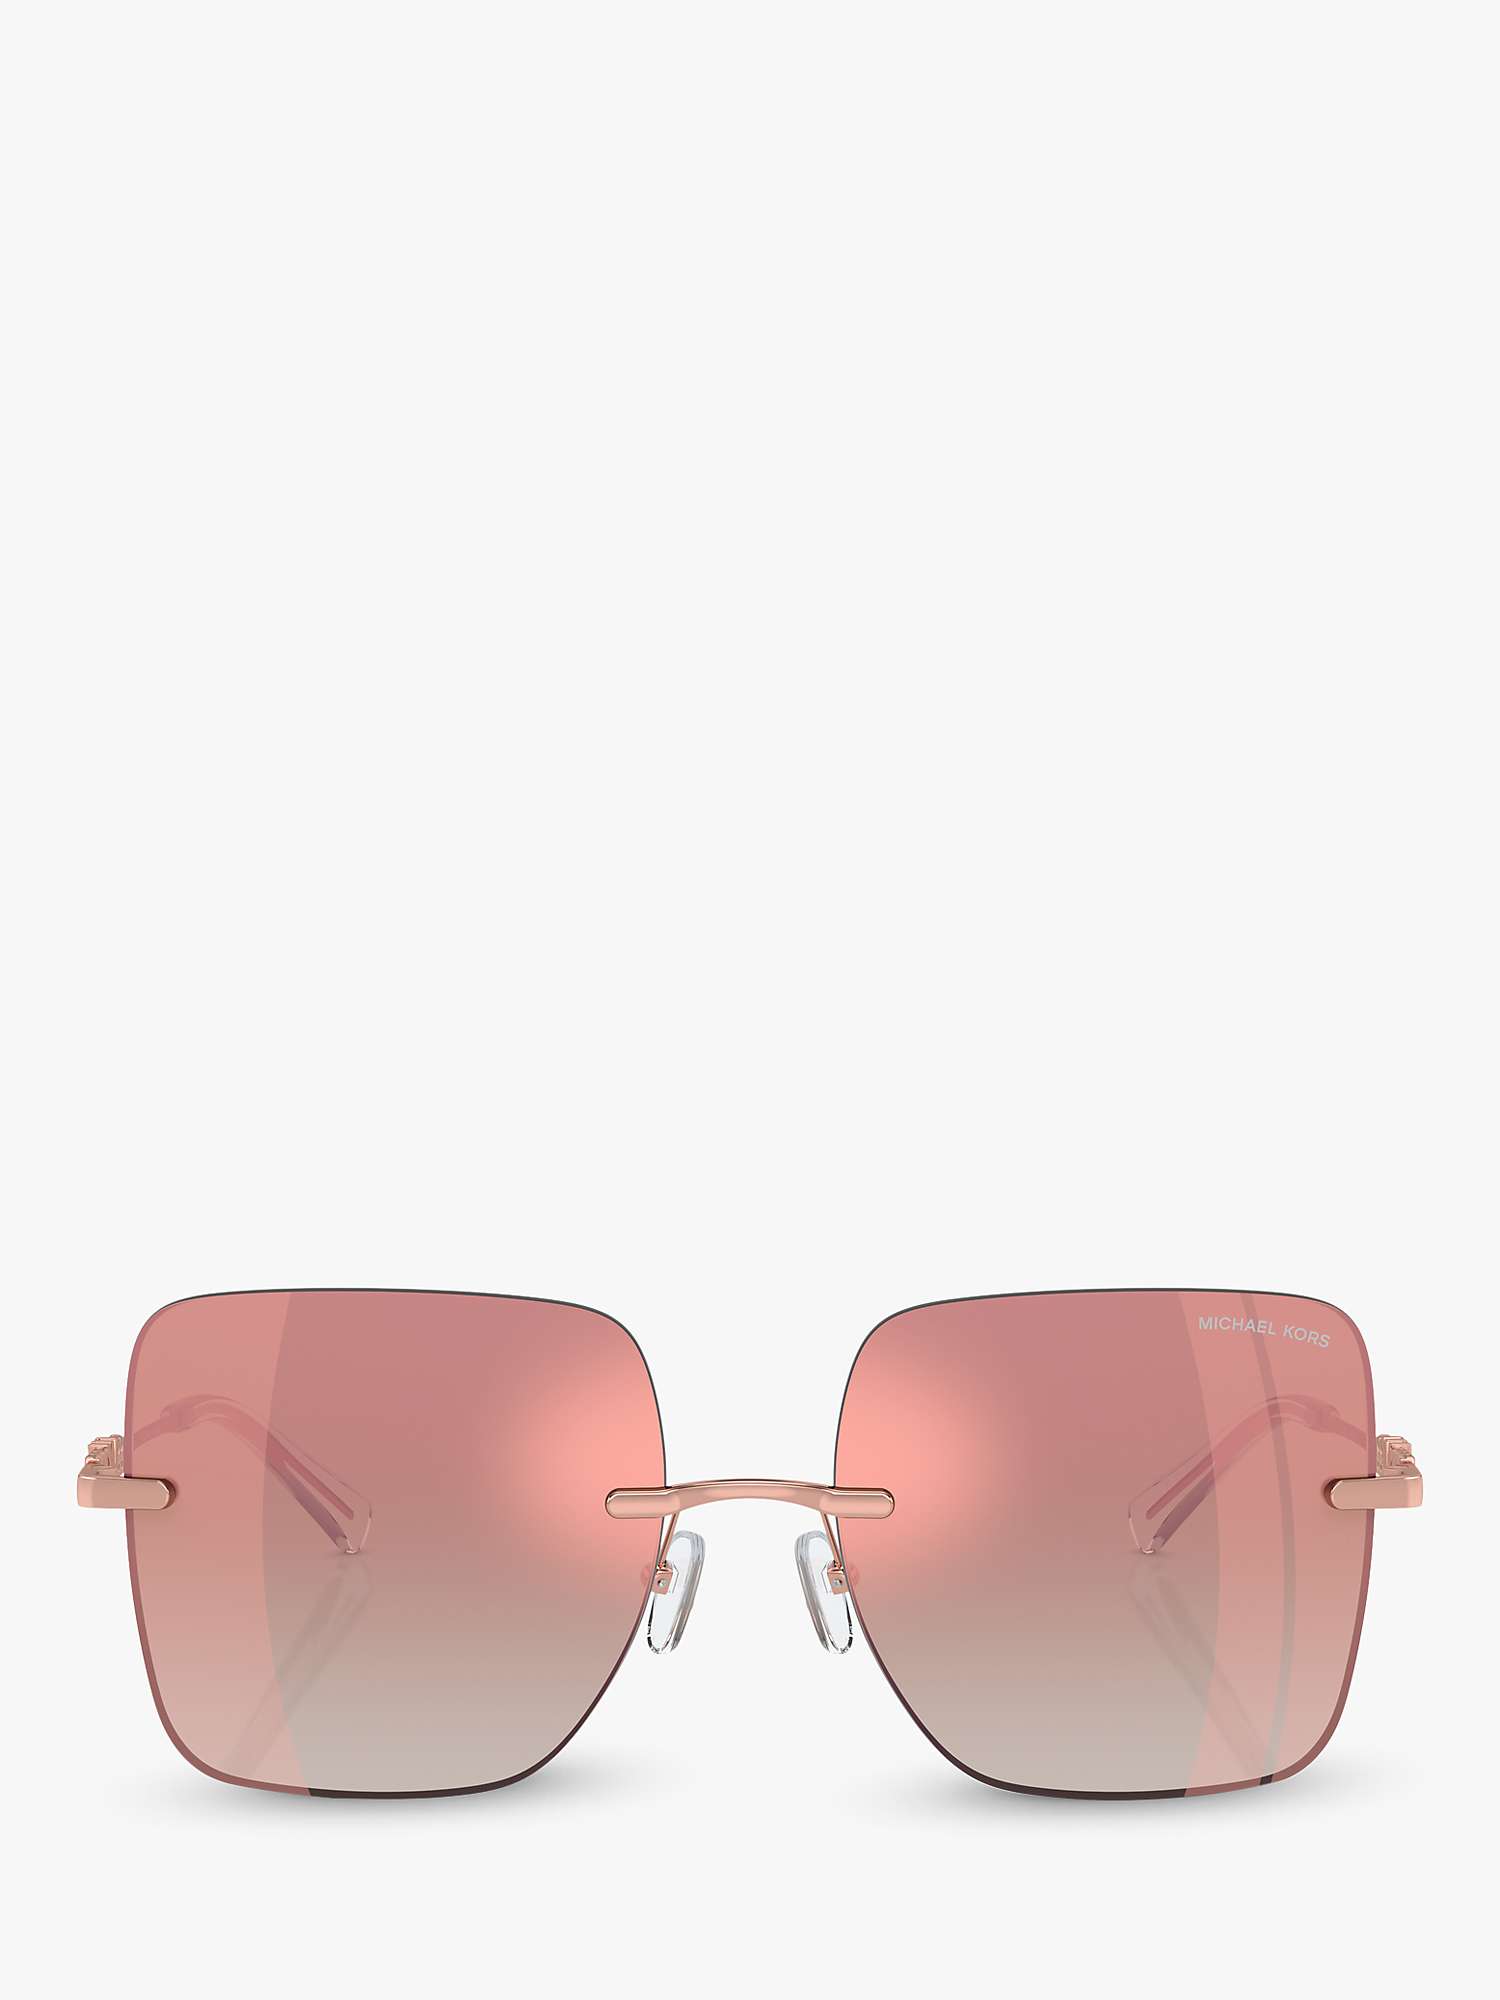 Buy Michael Kors MK1150 Women's Quebec Pillow Sunglasses, Rose Gold/Pink Gradient Online at johnlewis.com